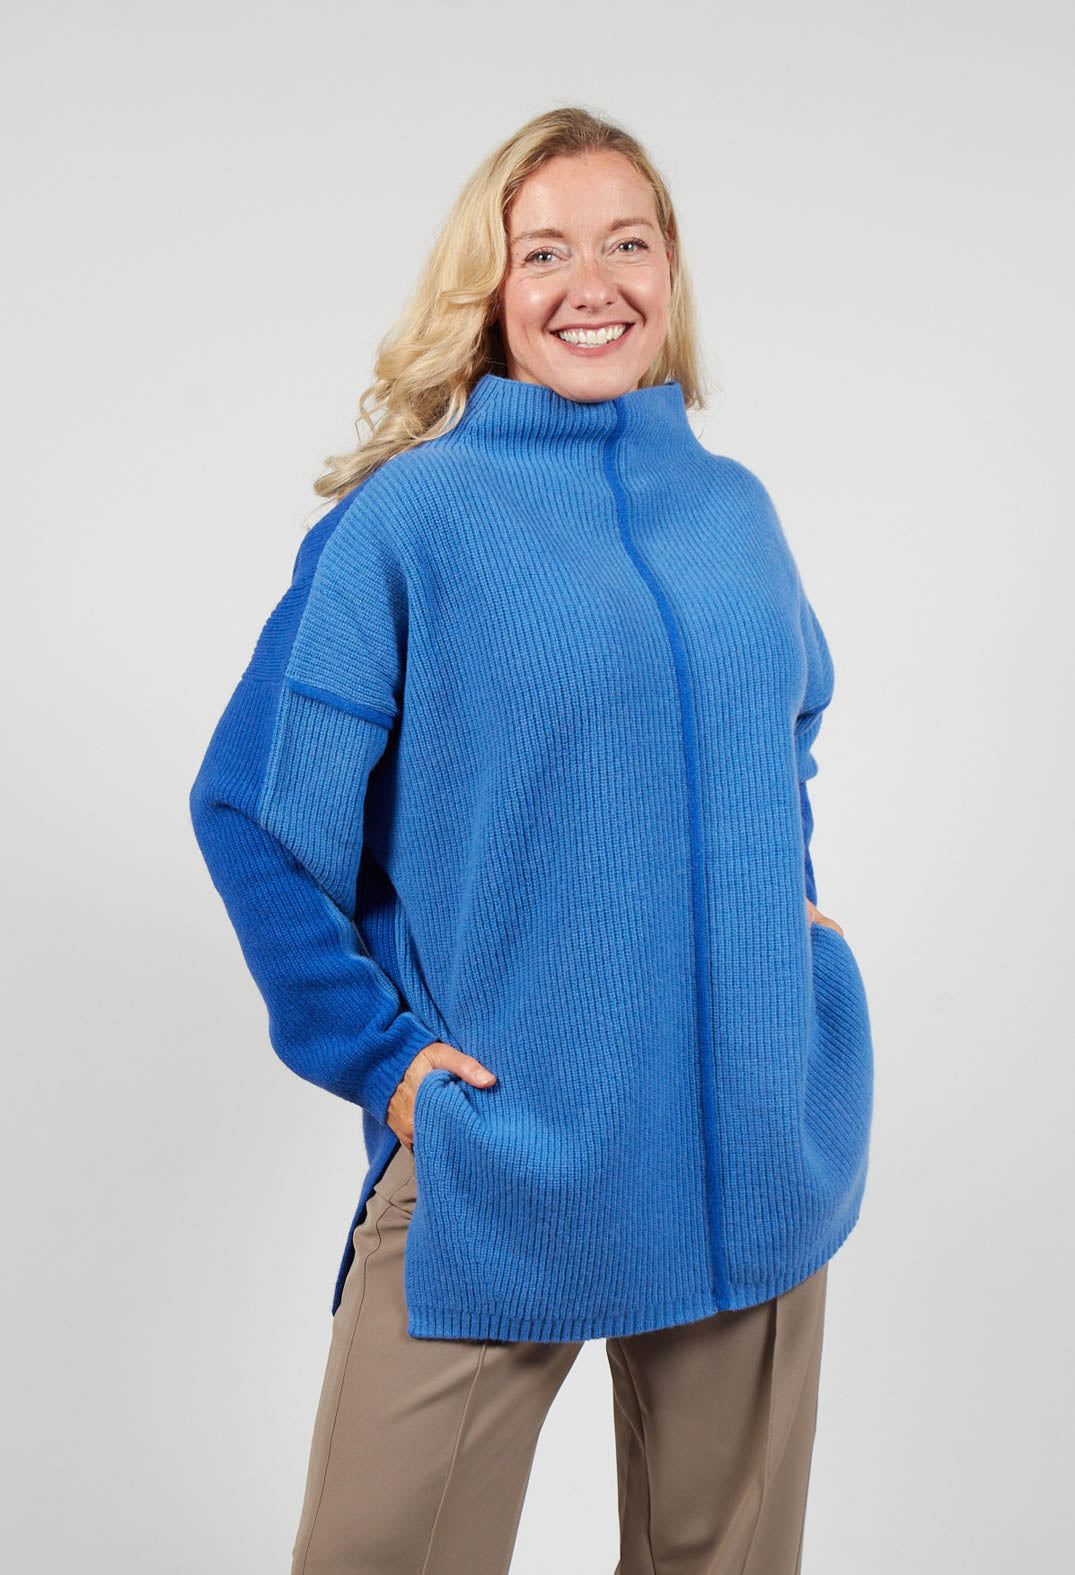 lady smiling wearing a Topaz blue jumper